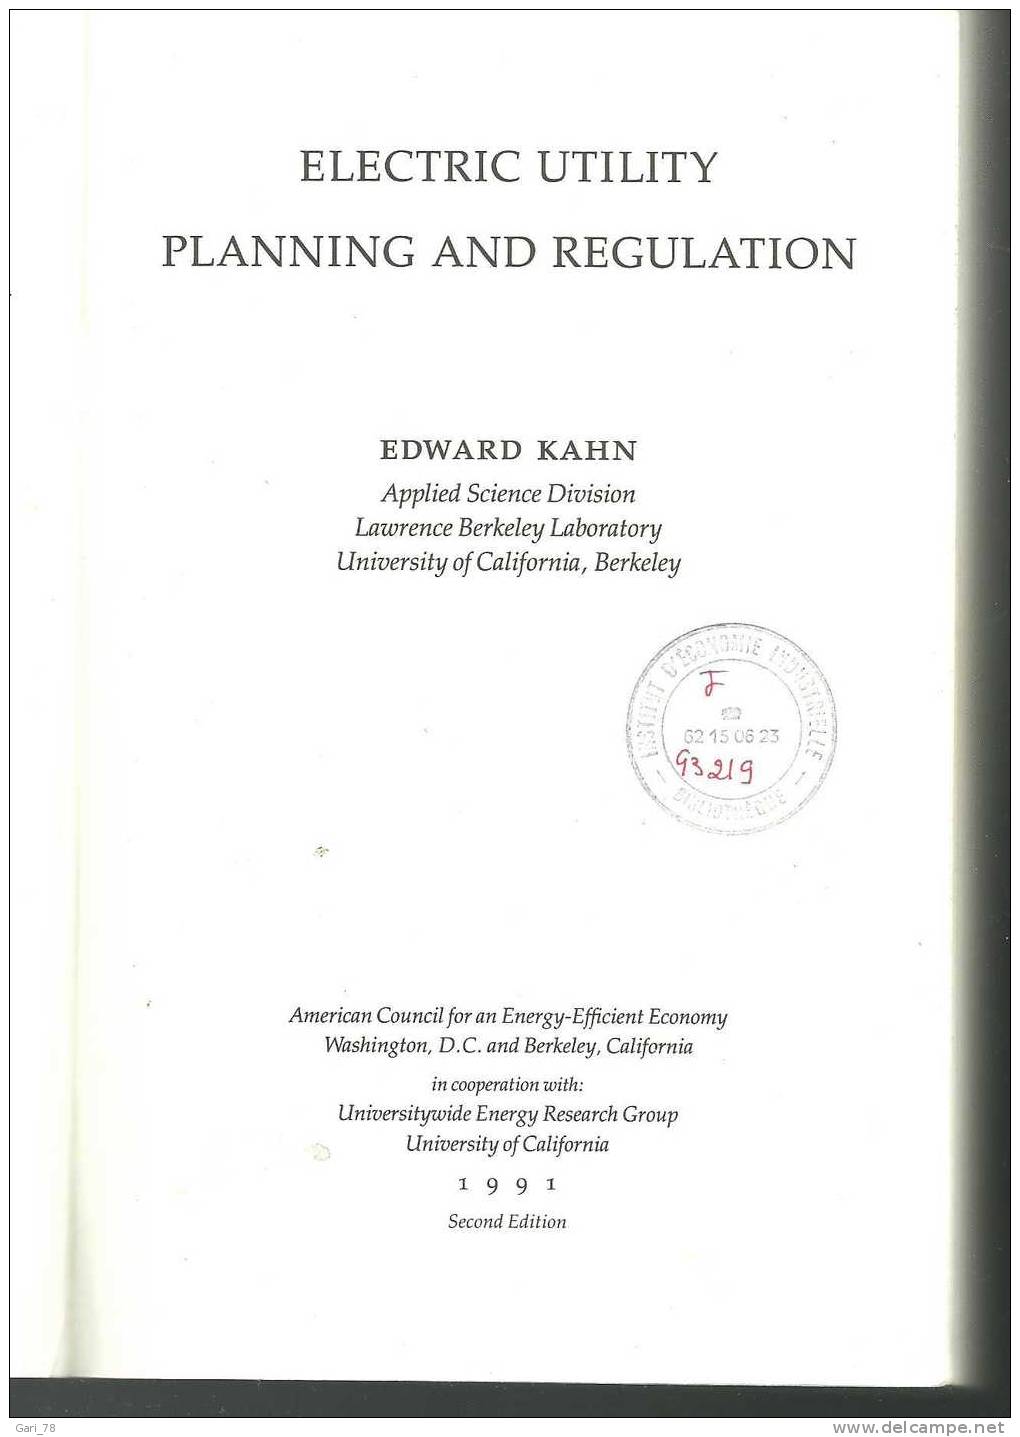 ELECTRIC UTILITY - PLANNING AND REGULATION Par Edward KAHN - Ingénierie